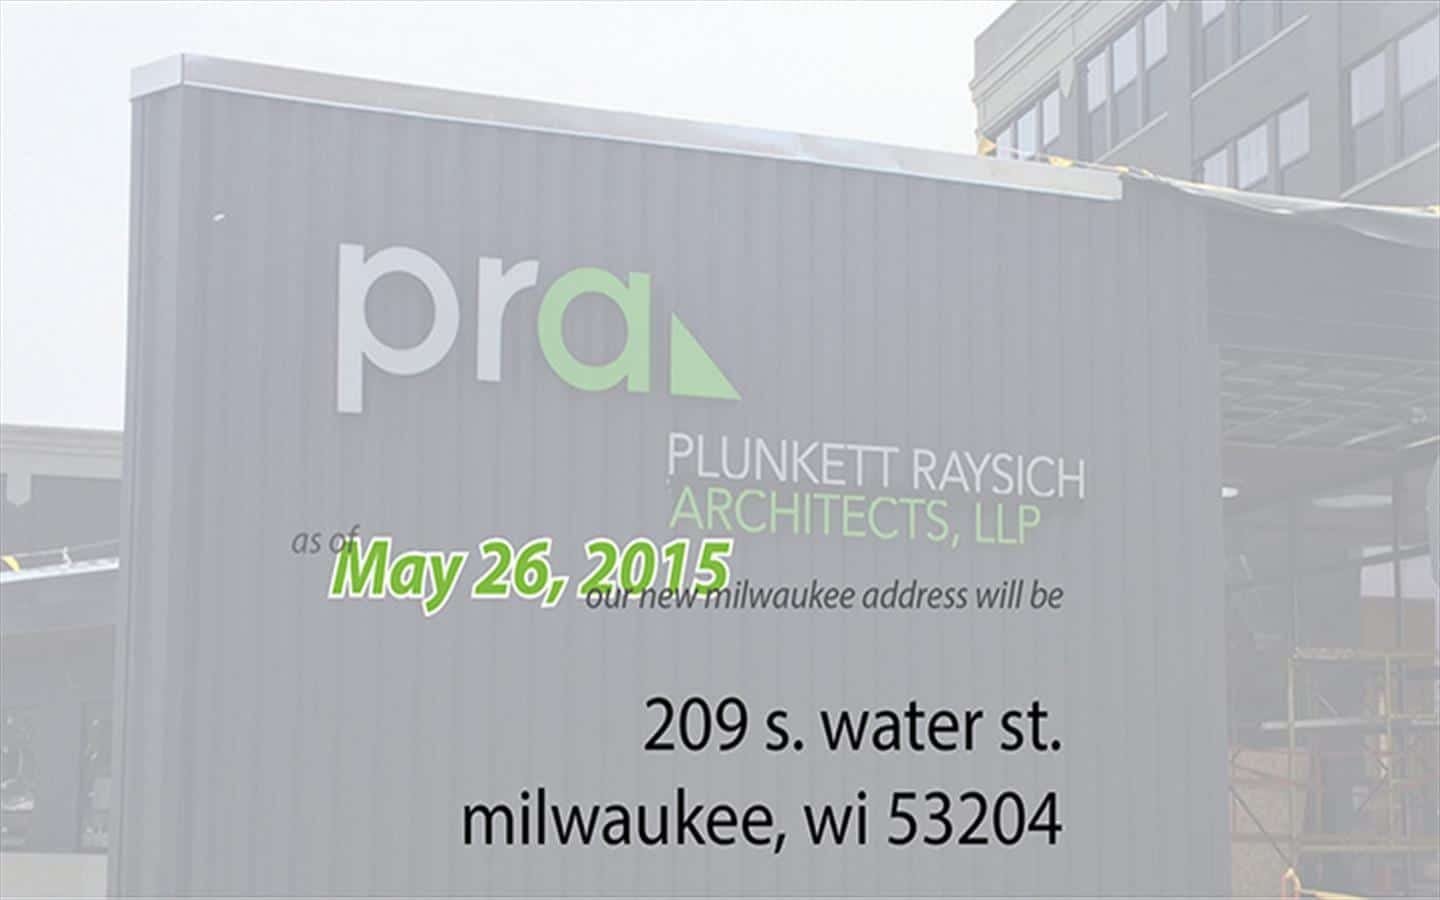 Welcome to Plunkett Raysich Architects Milwaukee, Wisconsin!